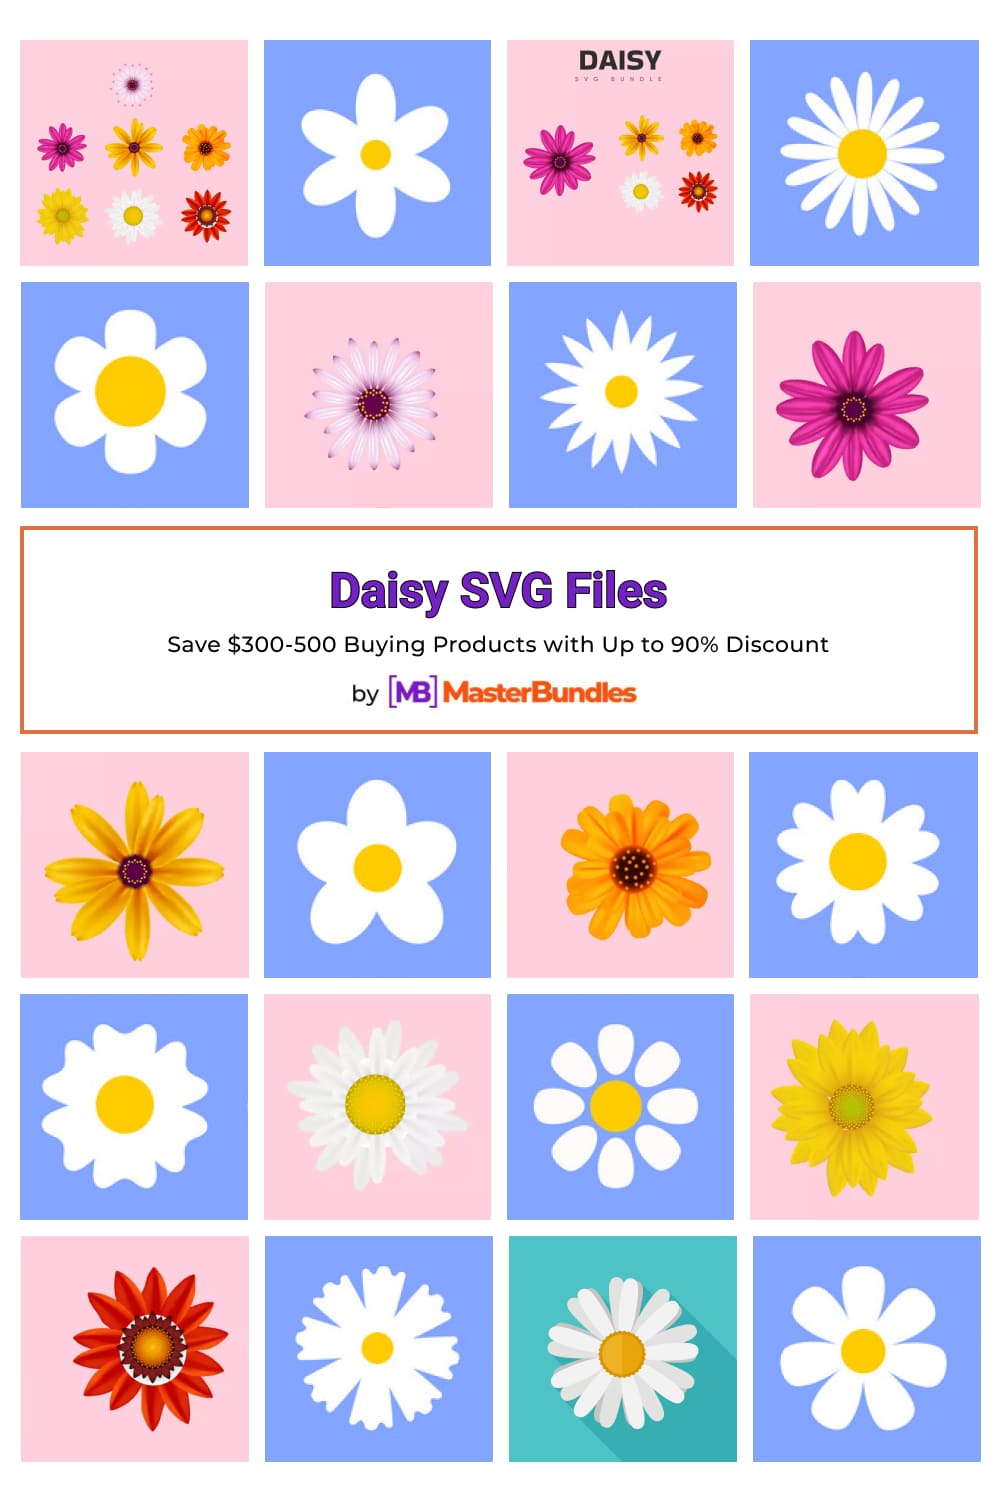 Daisy SVG Files for Pinterest.